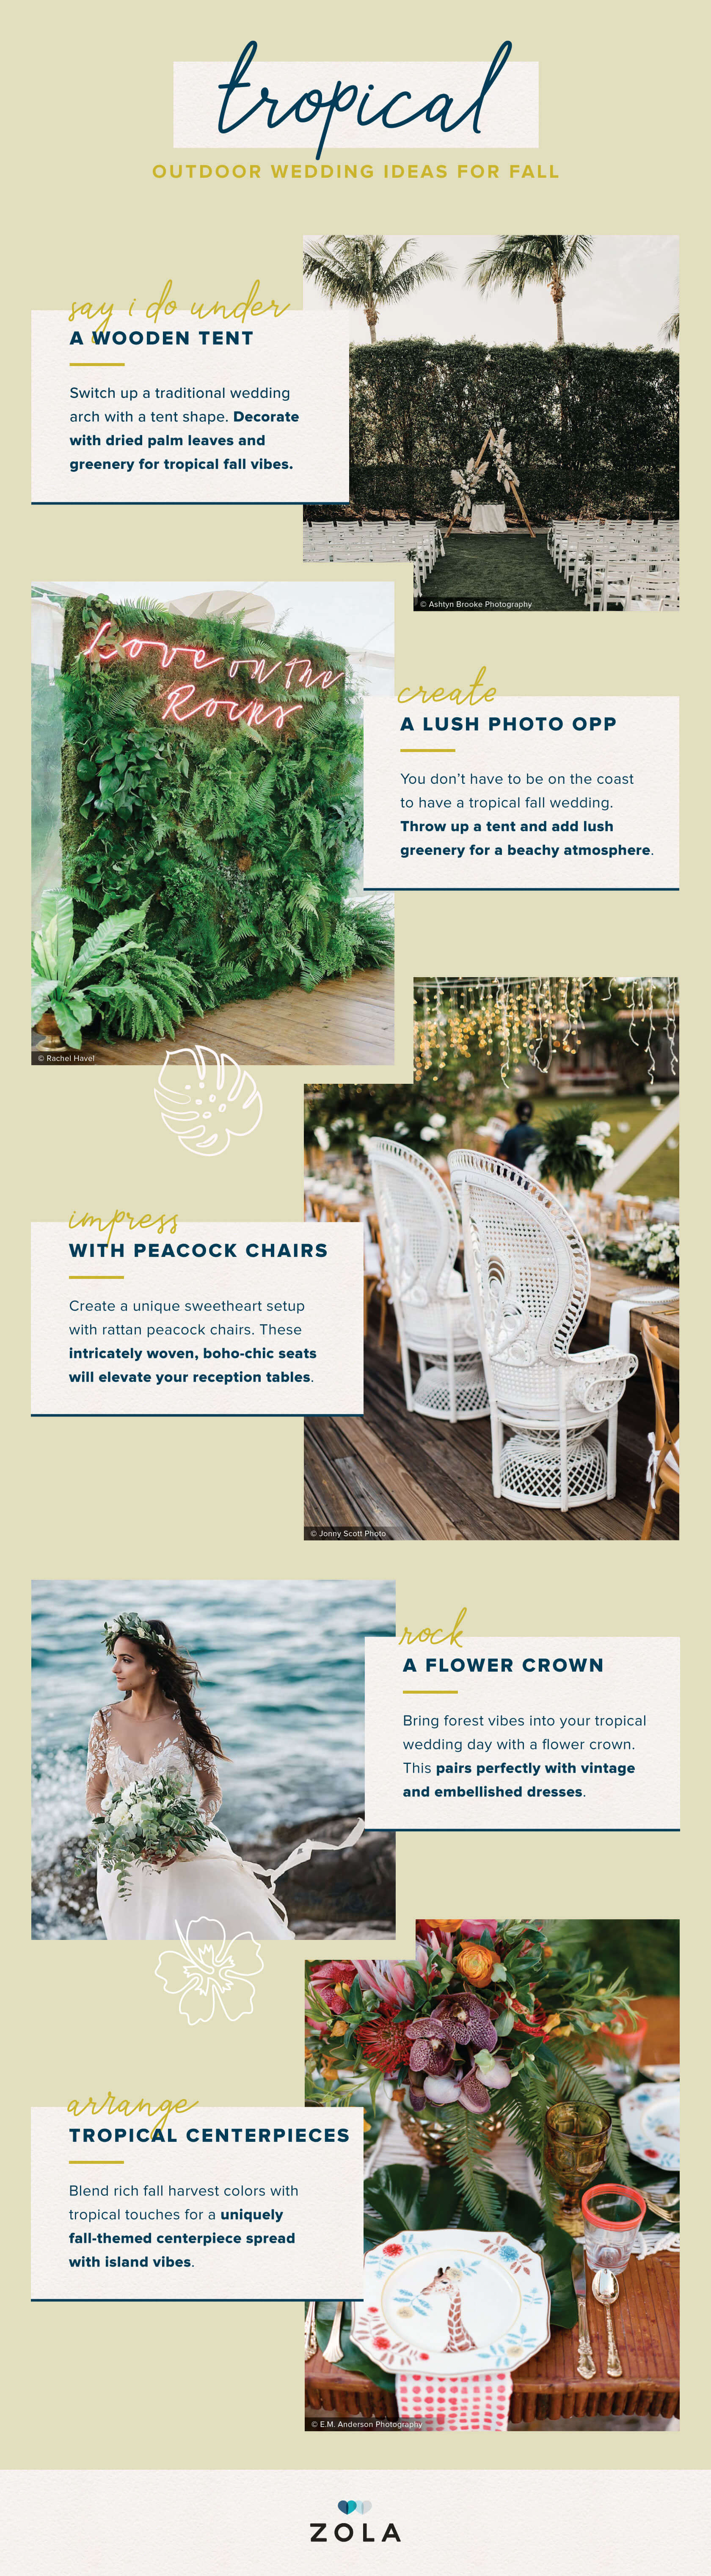 outdoor-wedding-ideas-for-fall-tropical